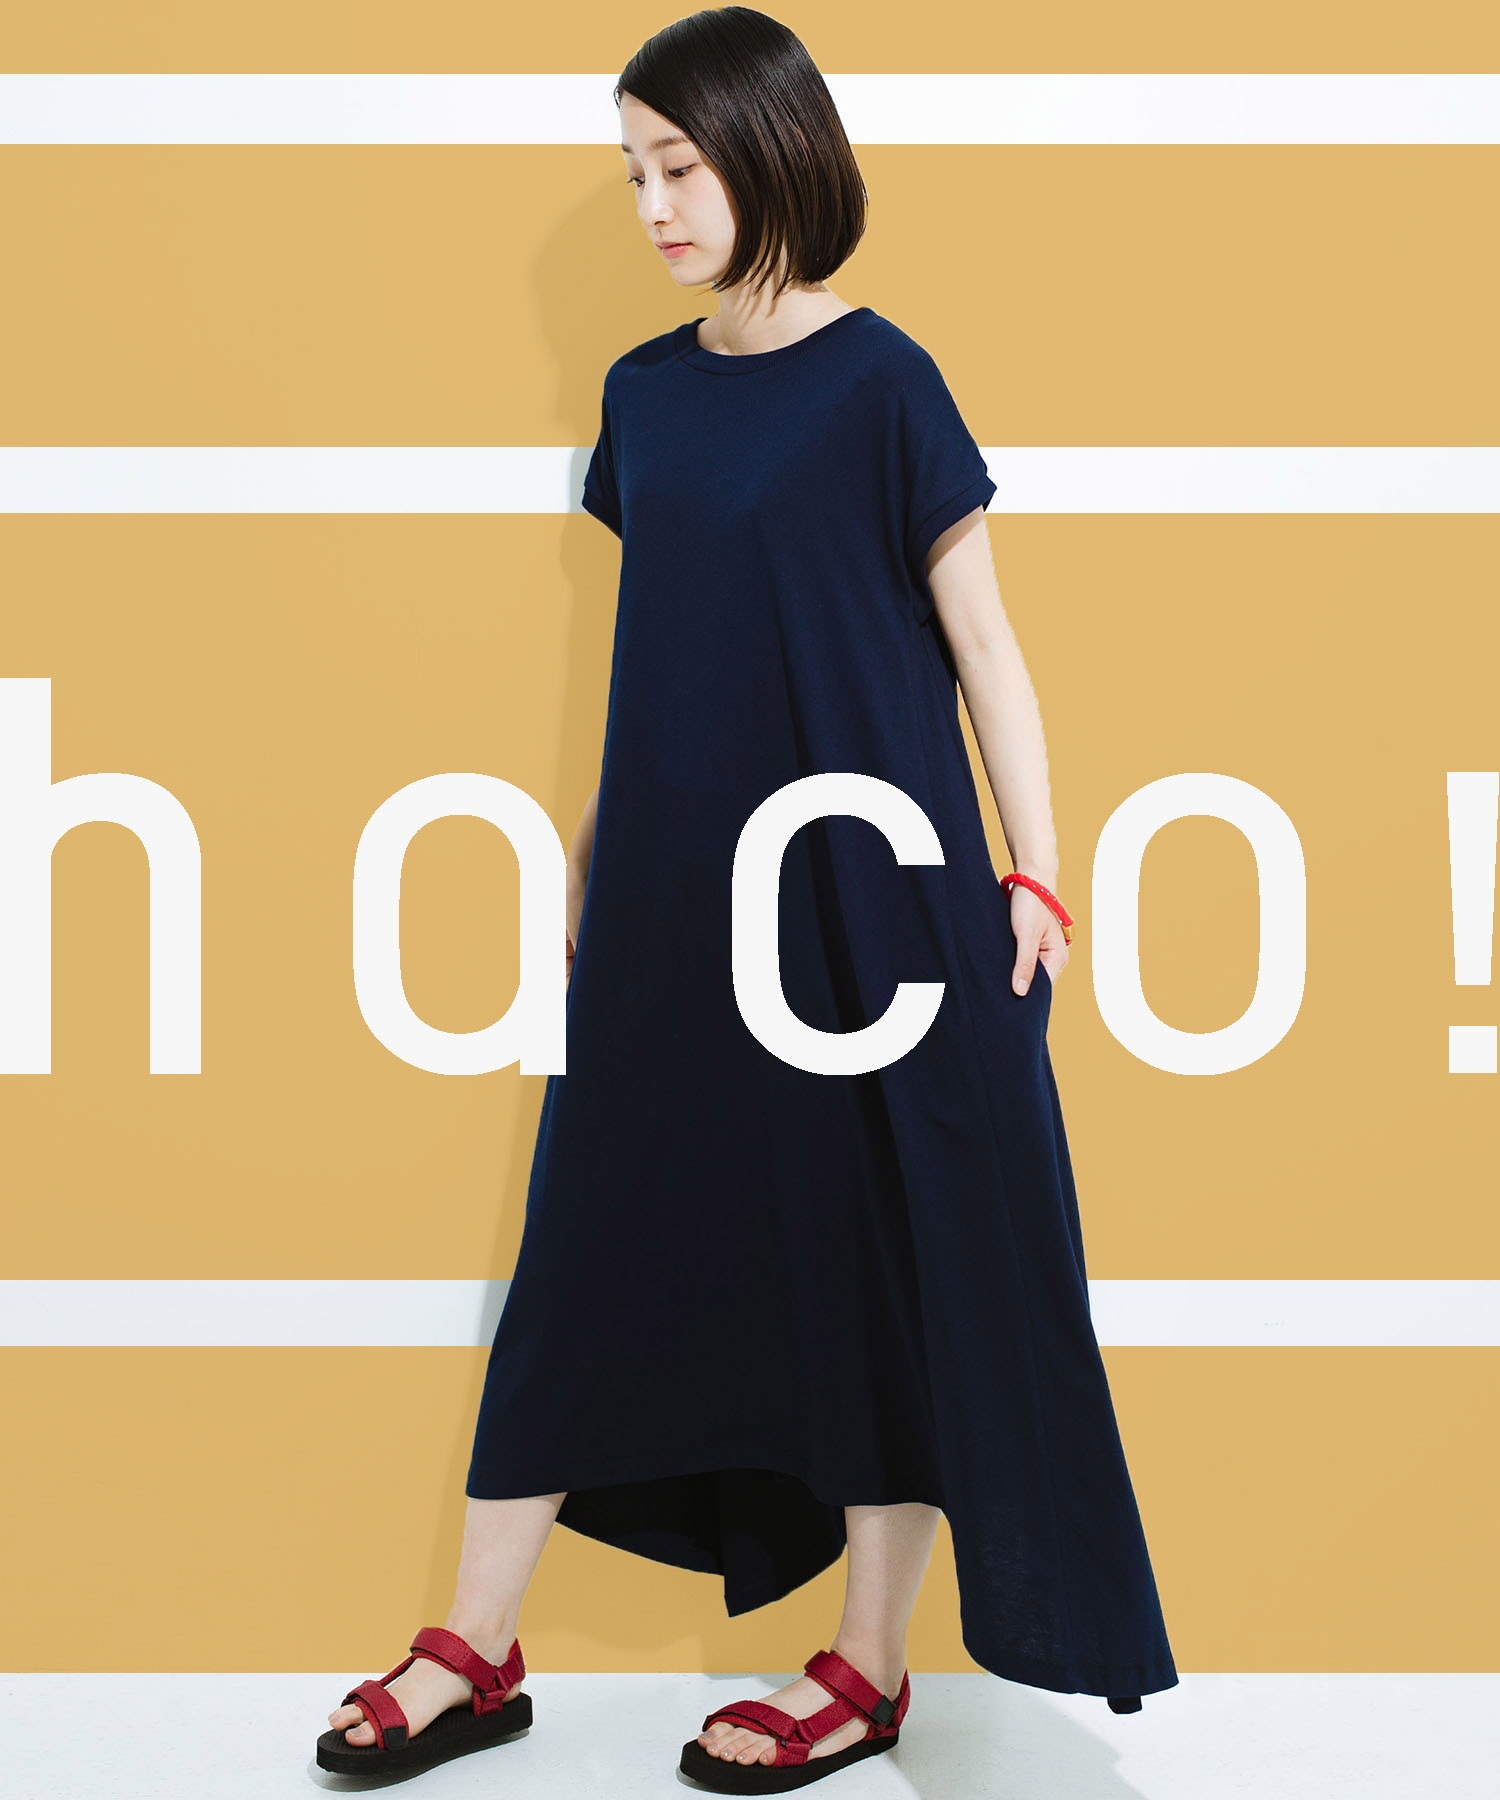 Haco ハコ のトピックス ゆるゆるらくちんオシャレ服 夏のかわいいノンストレス服 セール品番多数 Zozotown